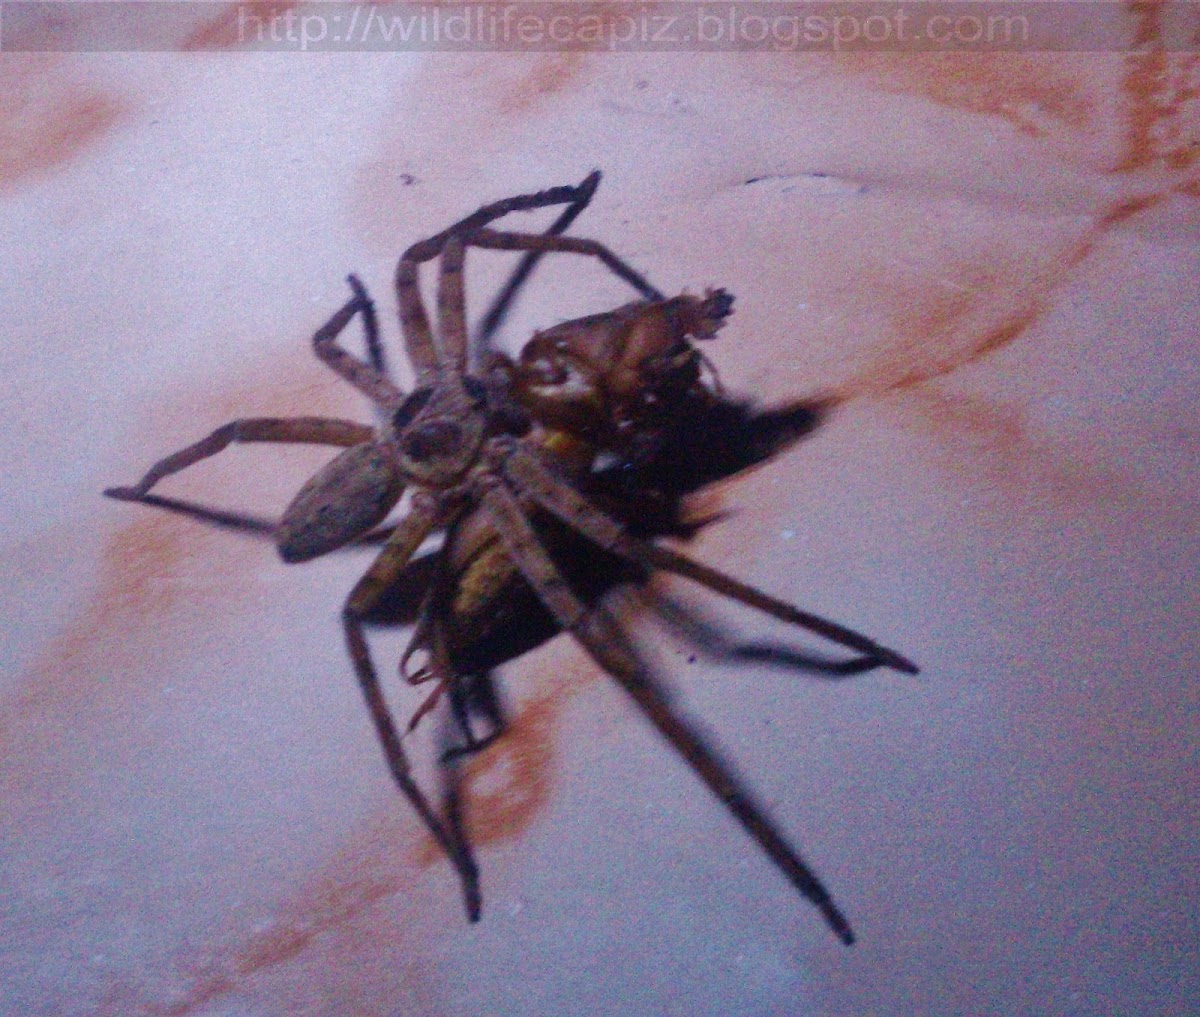 Domestic huntsman spider